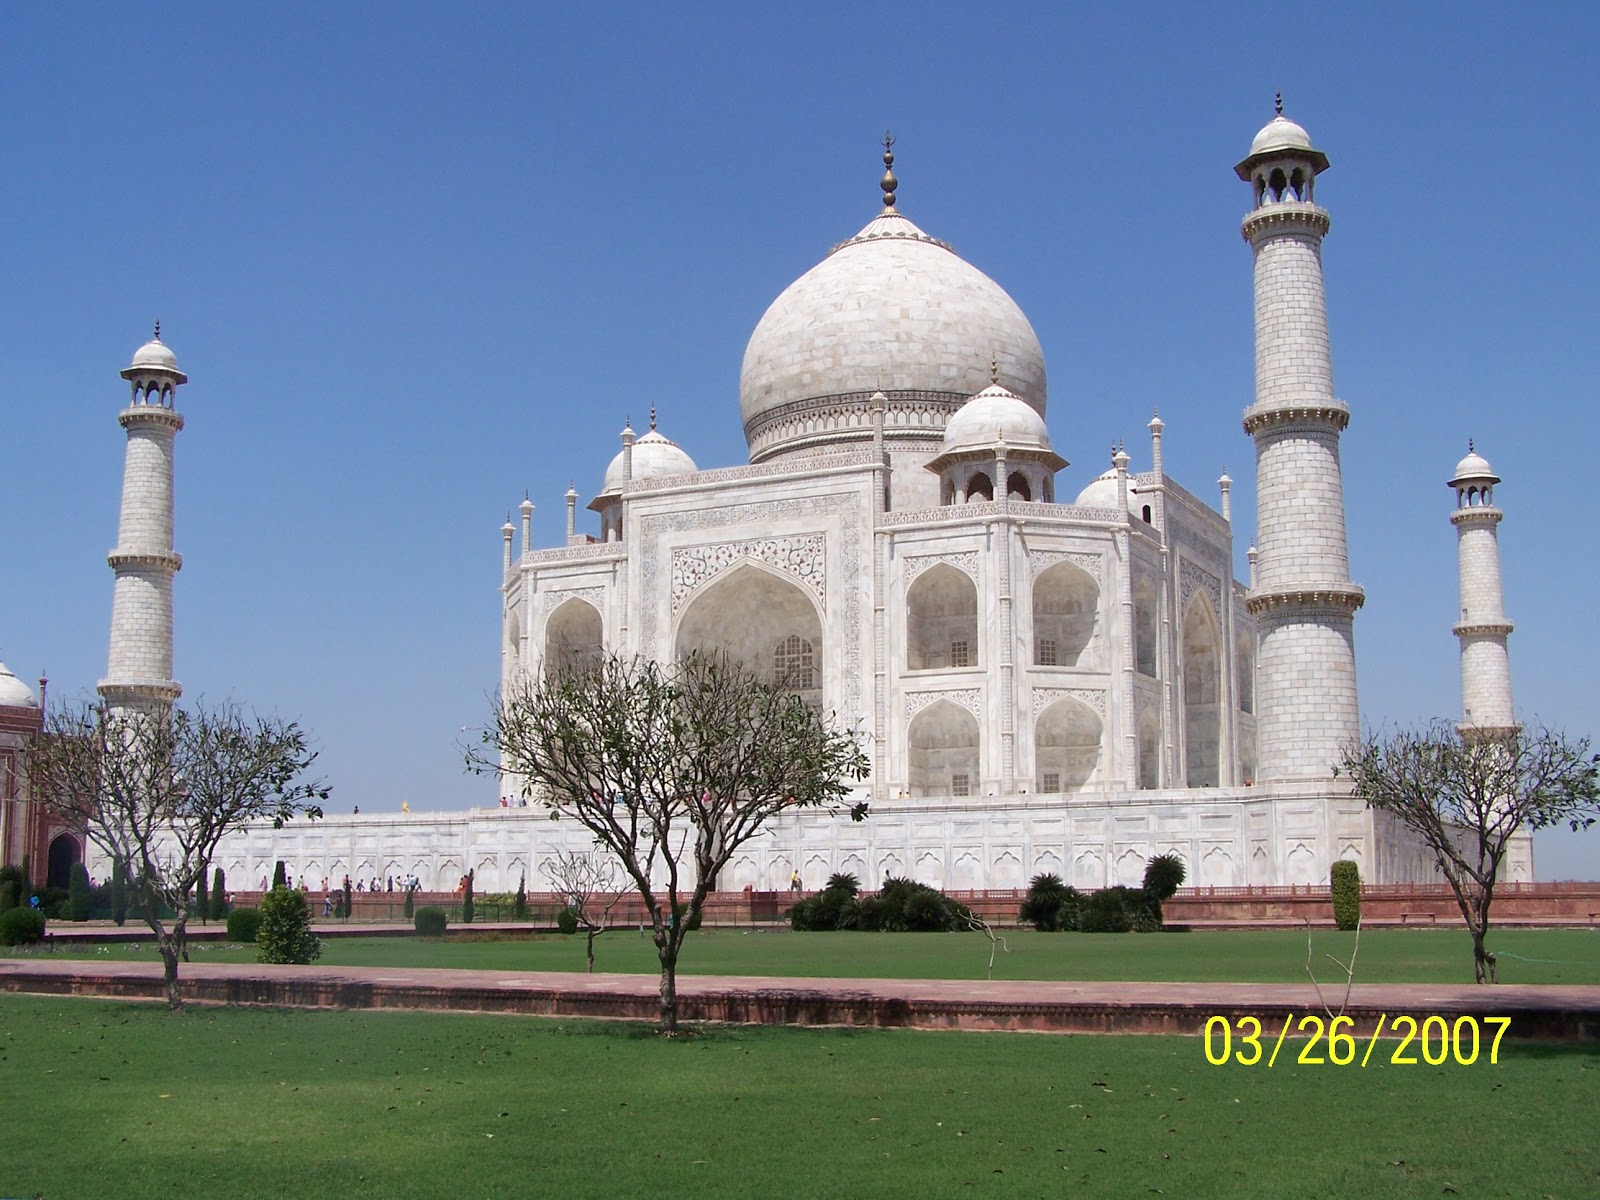 https://blogger.googleusercontent.com/img/b/R29vZ2xl/AVvXsEgNGMrz0tzWjvUpkTjX8qB9ZXPfKhuiatbCvw7k8YH64cs3VHyXPMI7VdKIfZrZeIZcOGvEjIaVLVgokc3I5mBAaBvAeUSKaSI5DkUetwqAFn2KZnNjOh9Ka5G5mFizL6L9aALfRbEQQX0/s1600/Taj_Mahal_agra_yamuna_river_india_touristplaces_world_wonders_heritage_sites_mumtaj_shahjahan_muslim_architecture_water.jpg